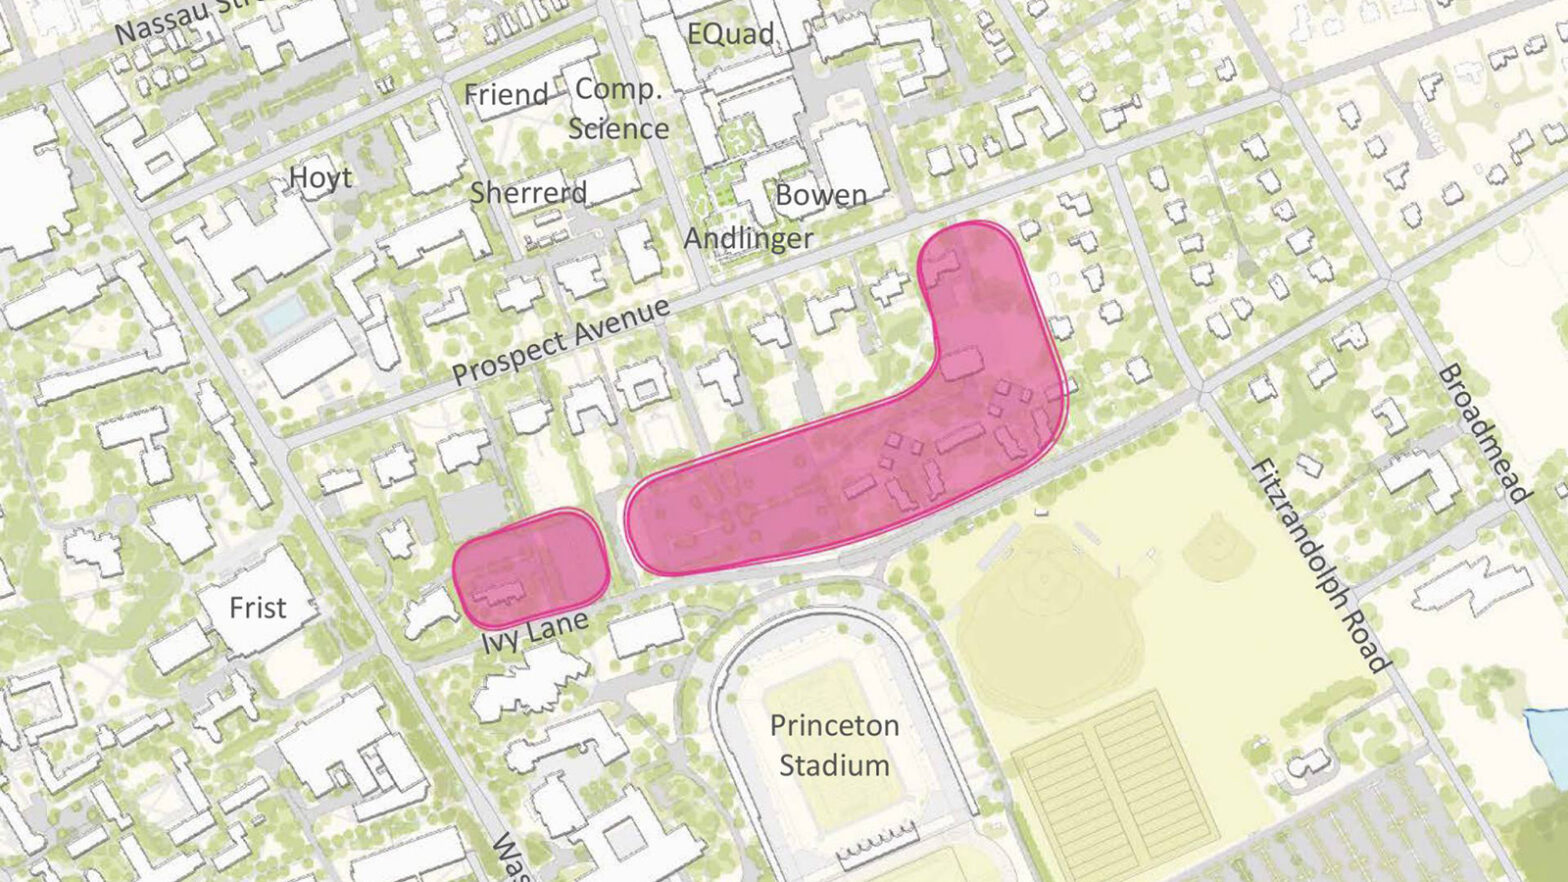 Map of new campus neighborhood